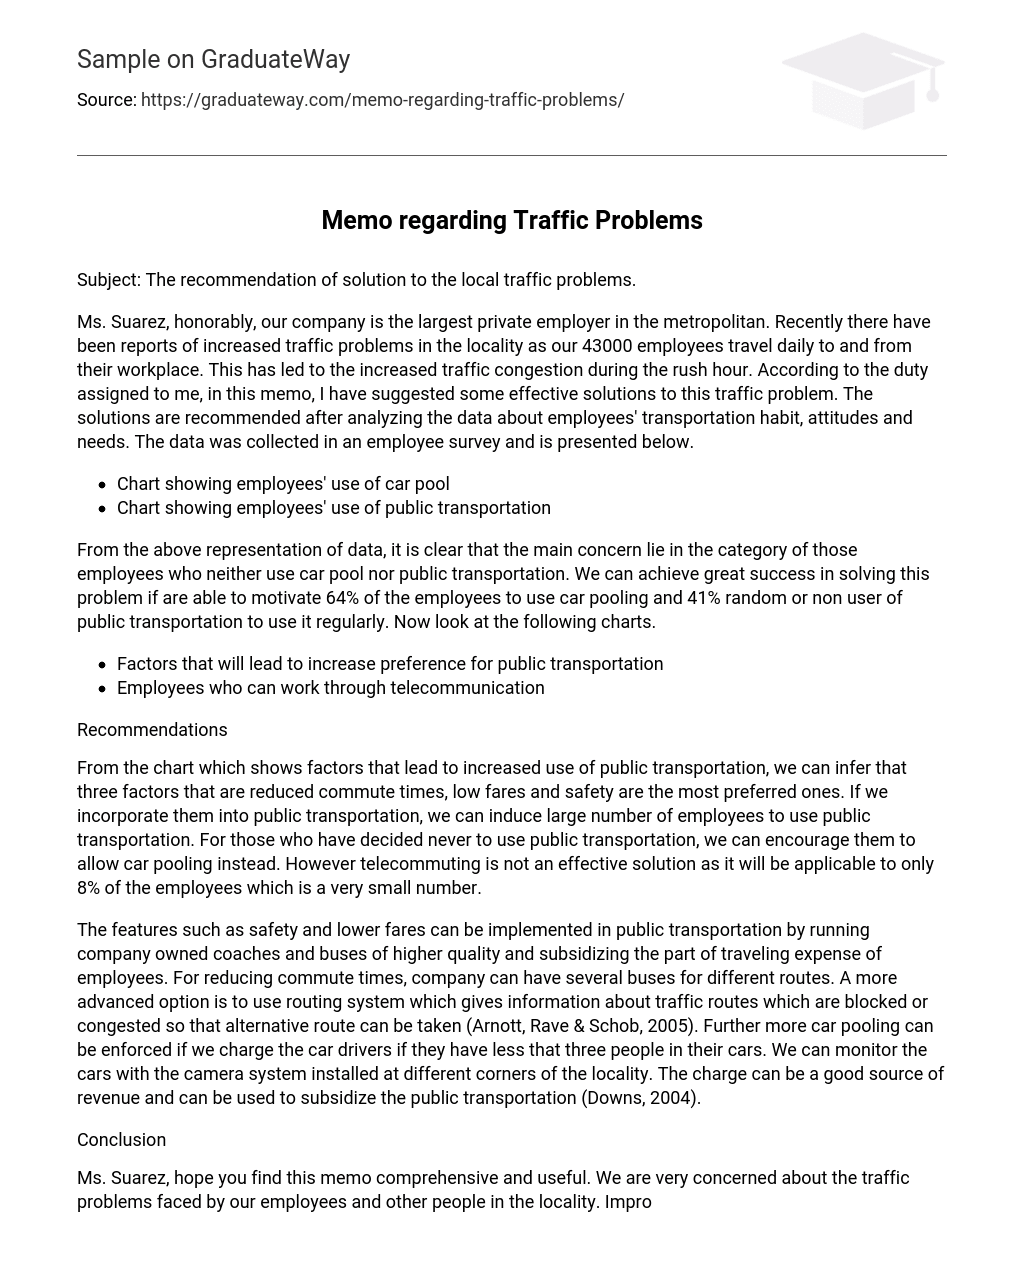 Memo regarding Traffic Problems